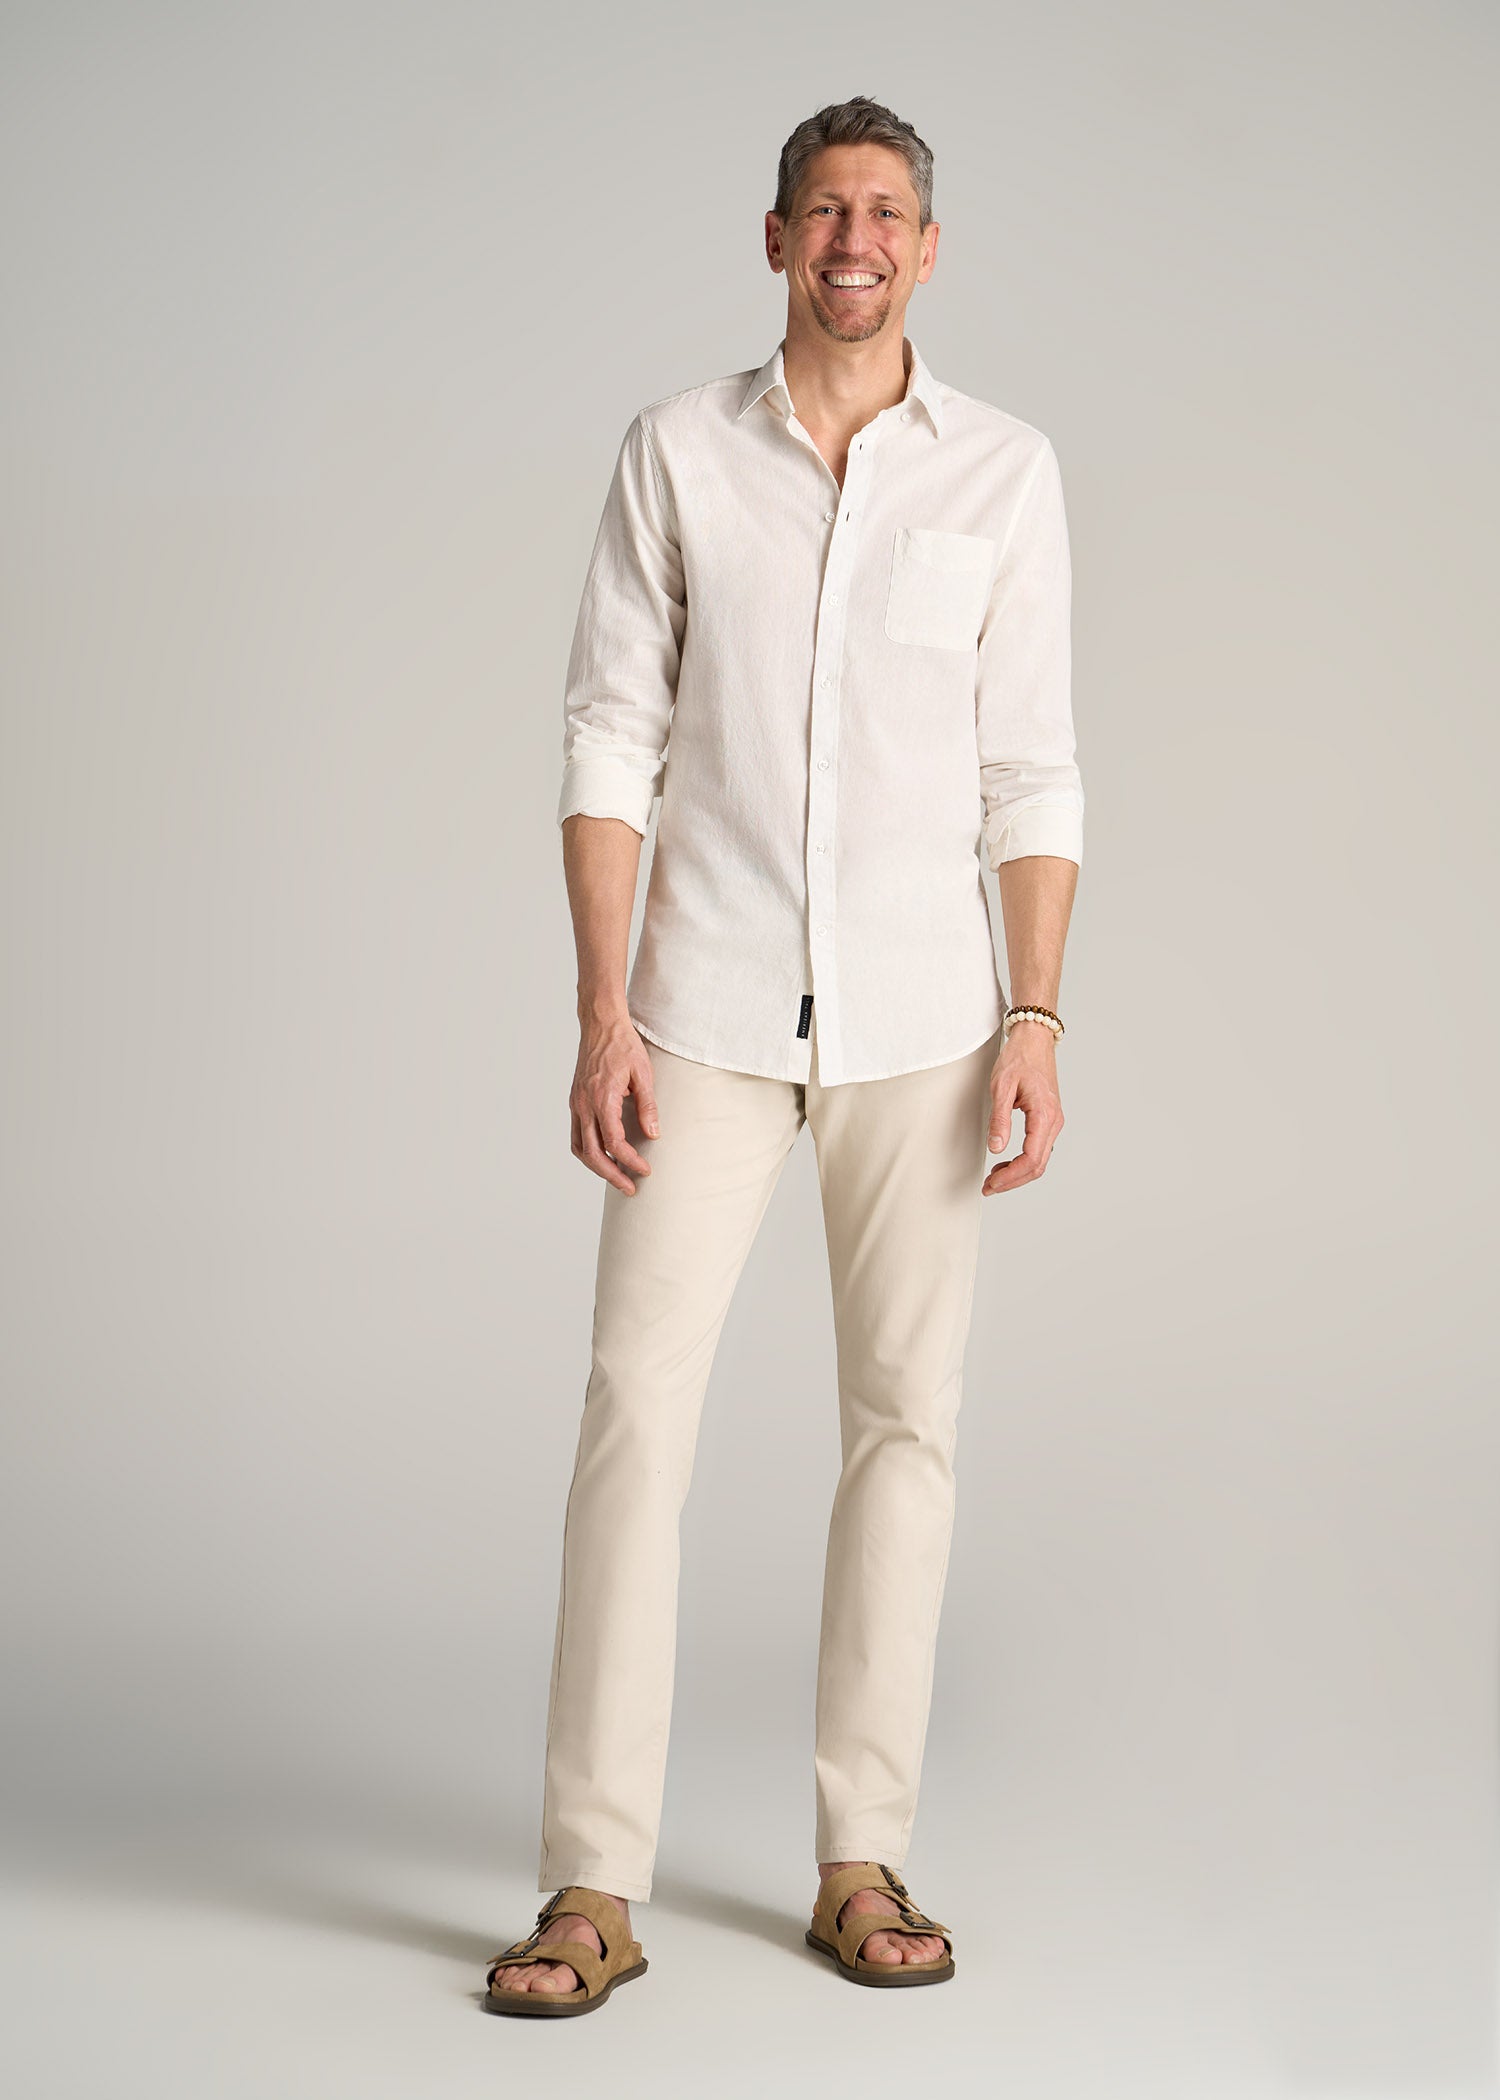 BUYJYA Men's Linen Shirt Pants 2 Pieces Outfits Short Sleeve Shirt Yoga  Pants Beach Wedding Suits - Walmart.com